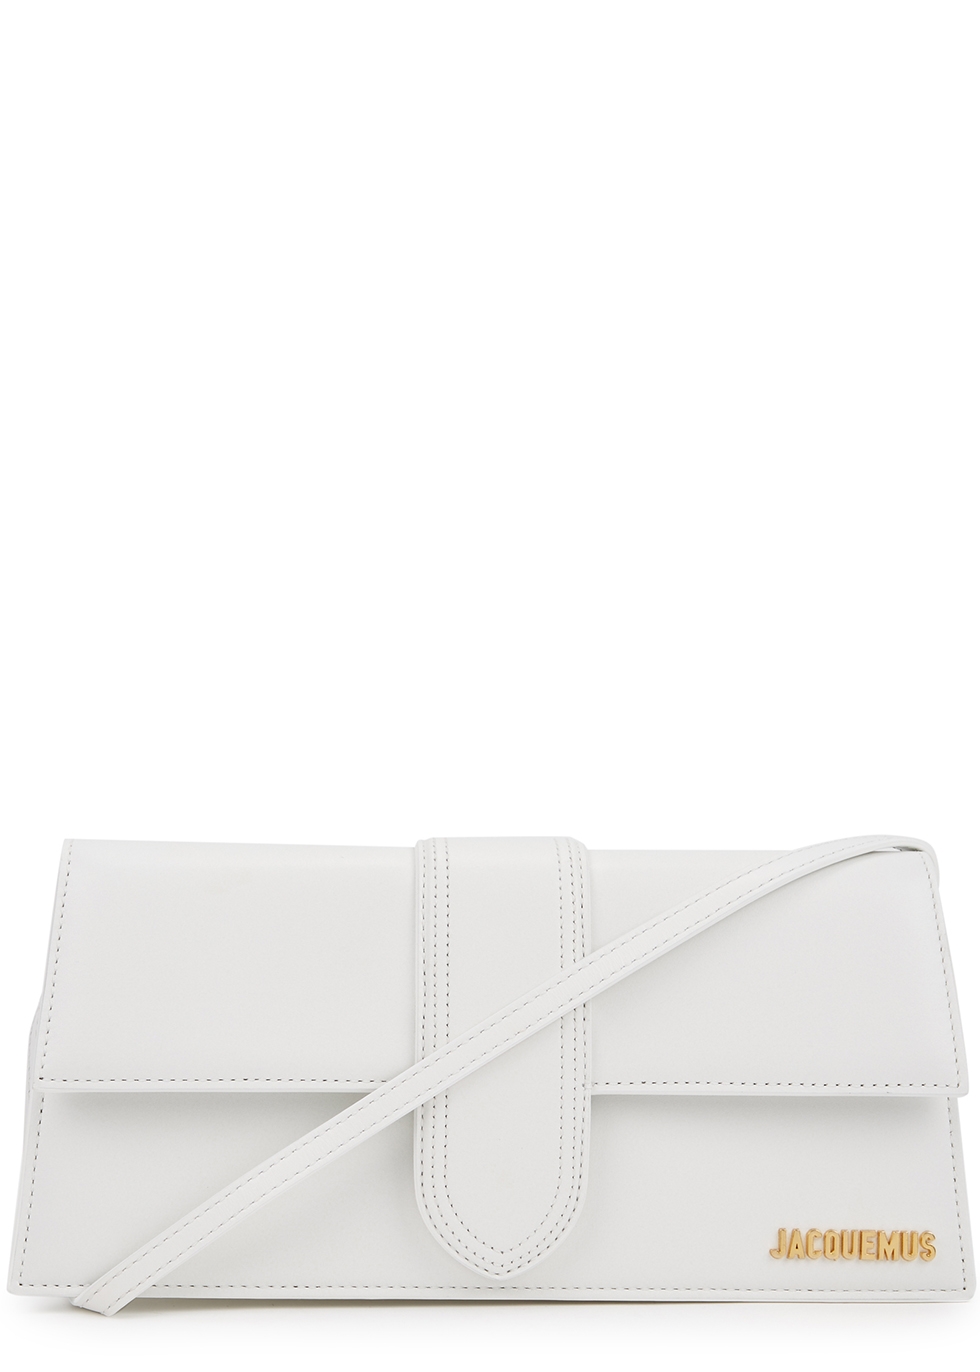 Jacquemus Le Bambino white leather top handle bag - Harvey Nichols